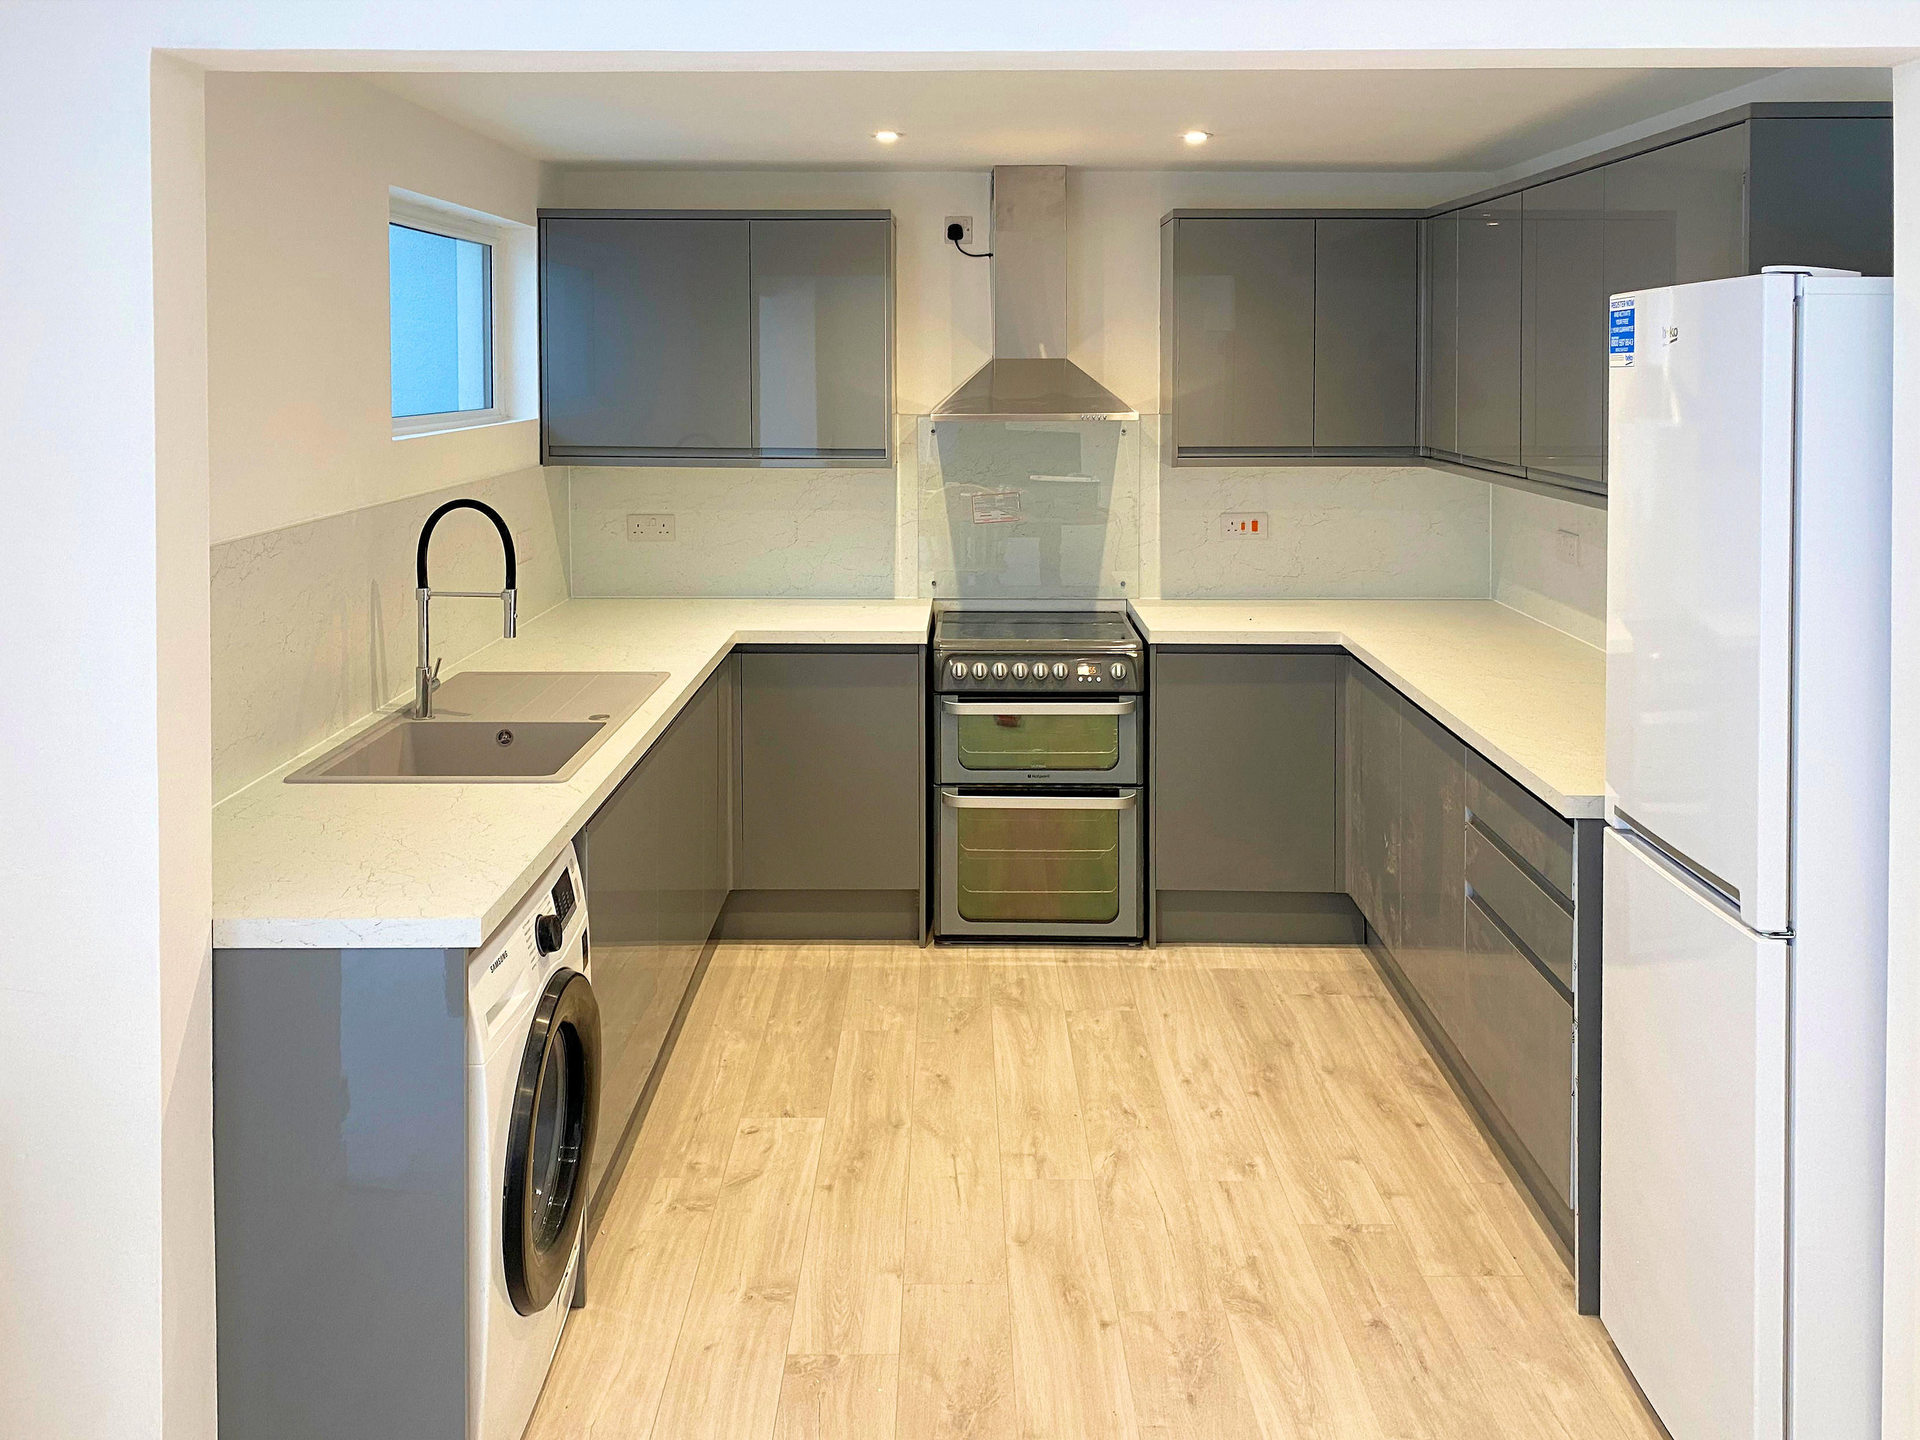 Domestic remodel and new completed kitchen Barnstaple North Devon. Using Luxury Vinyl Flooring (LVT) “Vinyl Click Flooring”